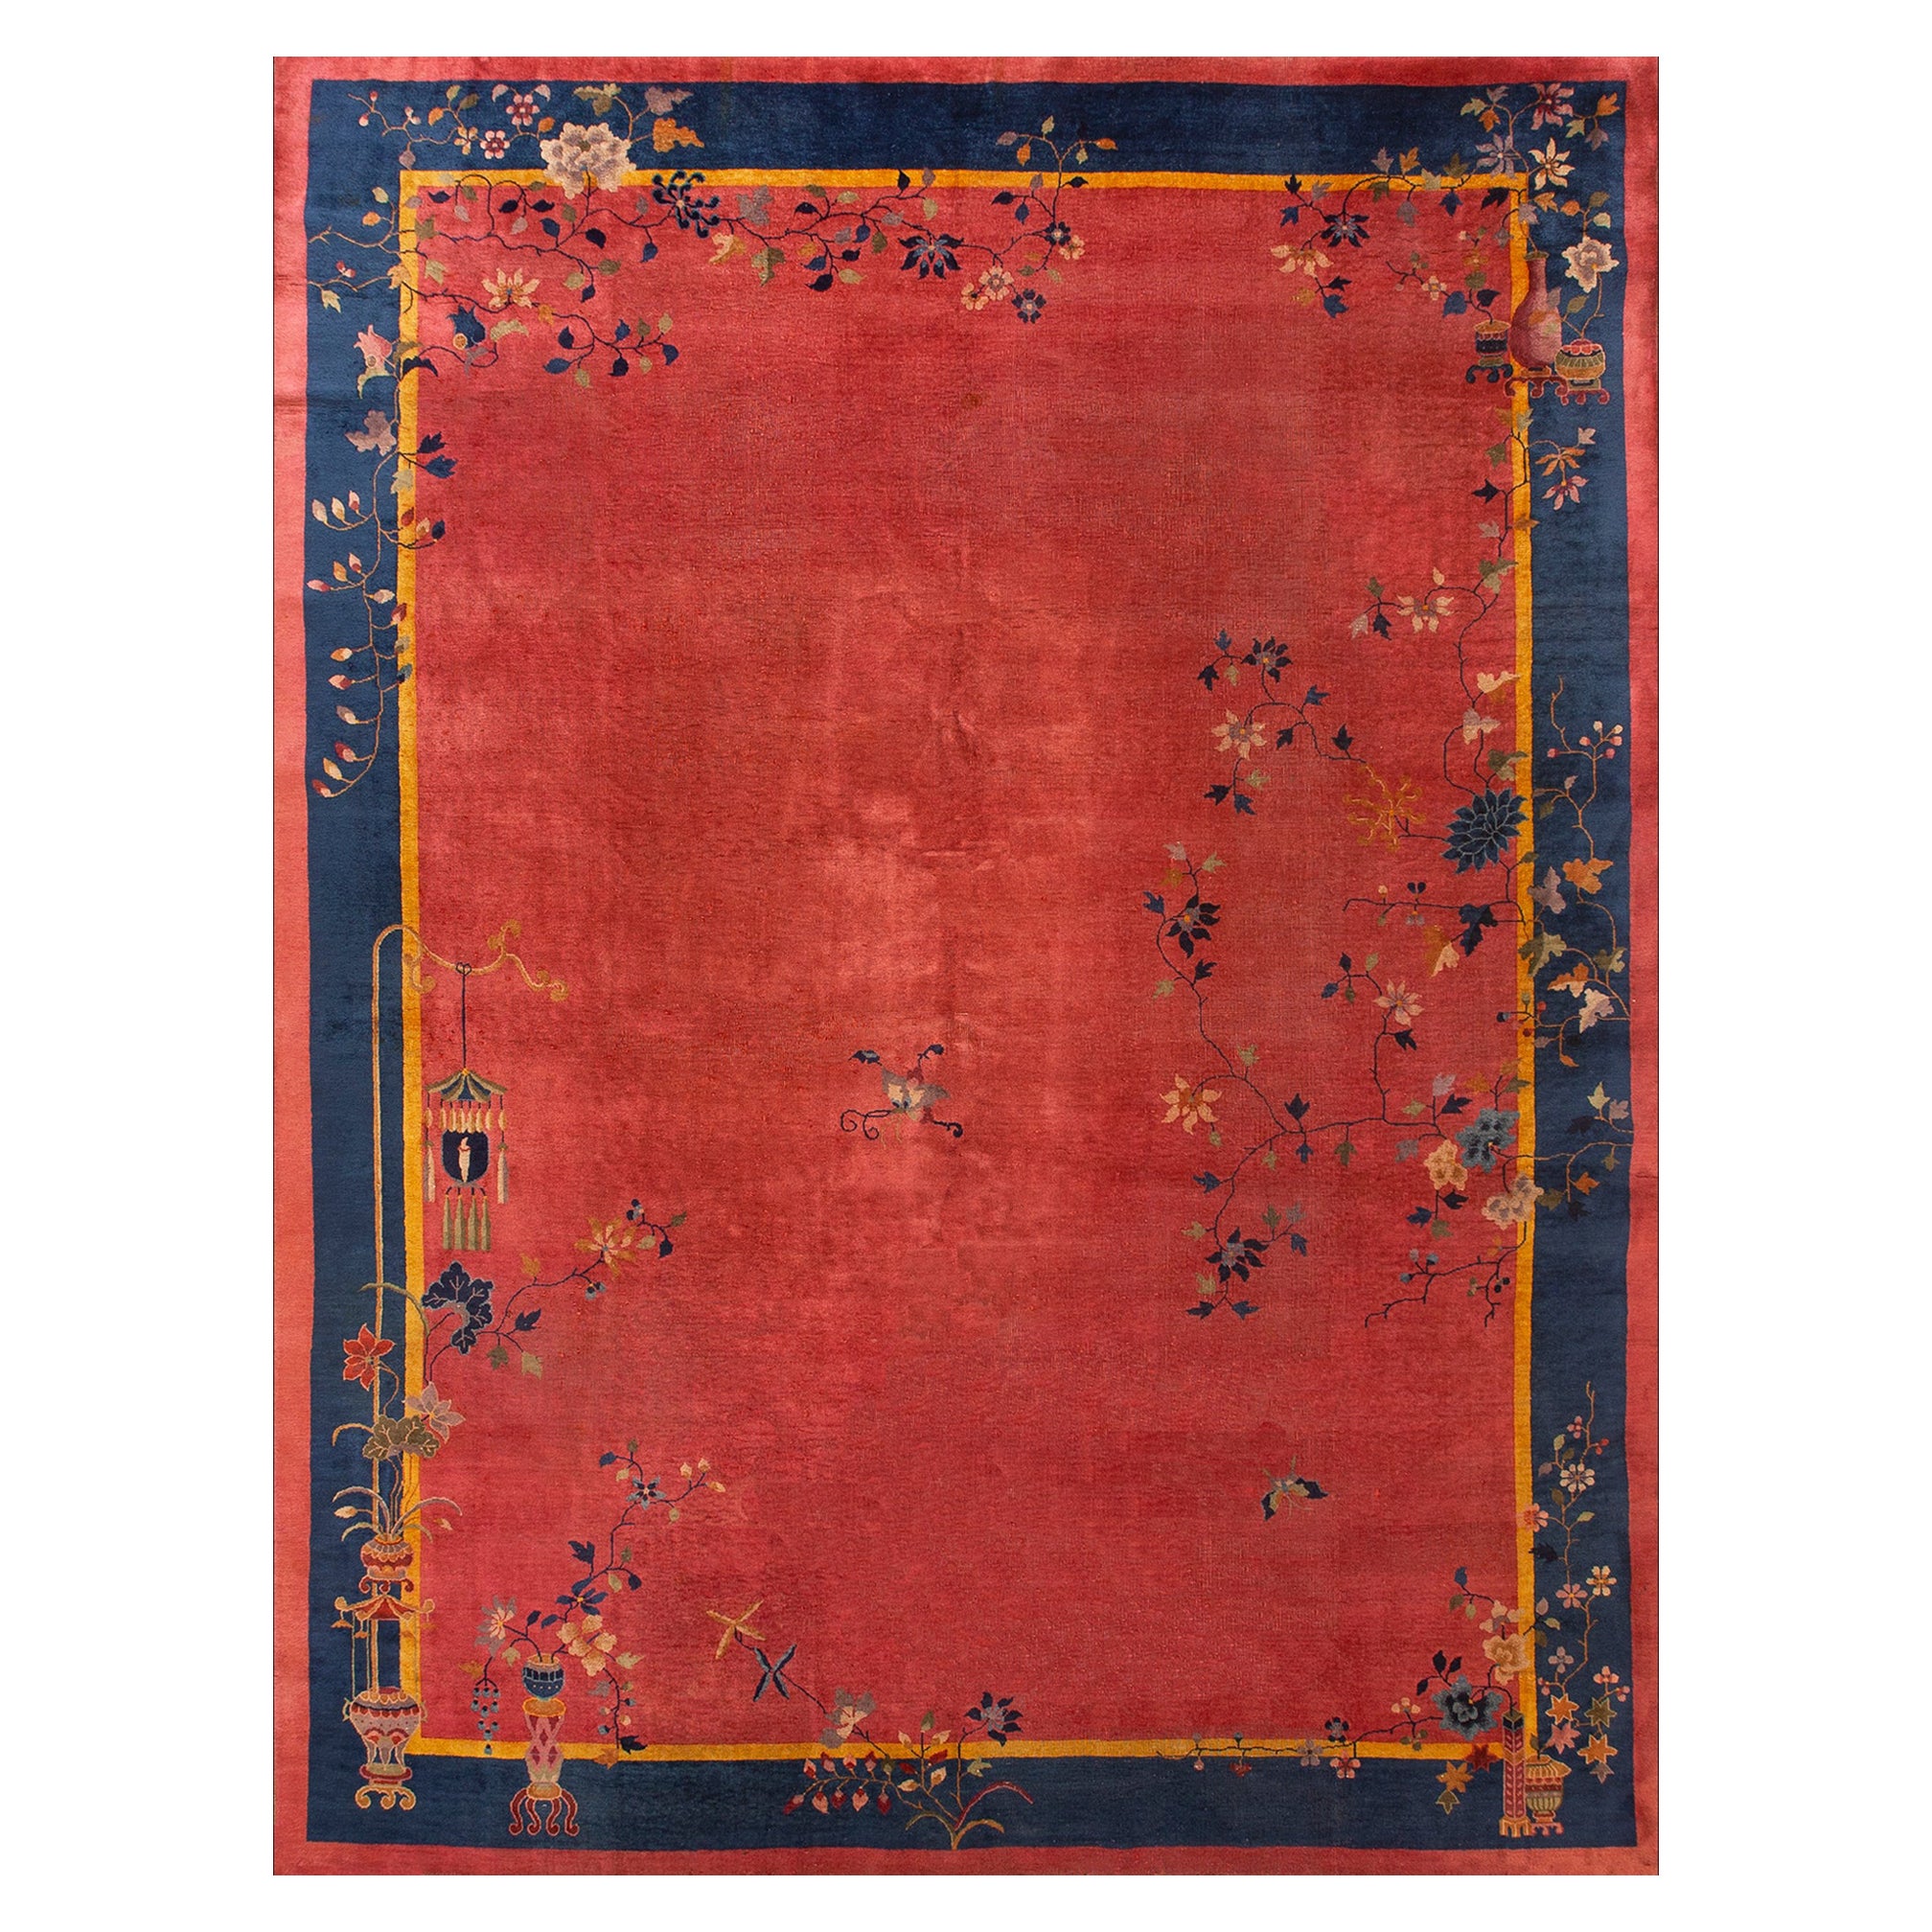 1920s Chinese Art Deco Carpet ( 10'3" x 136" - 312 x 412 cm )